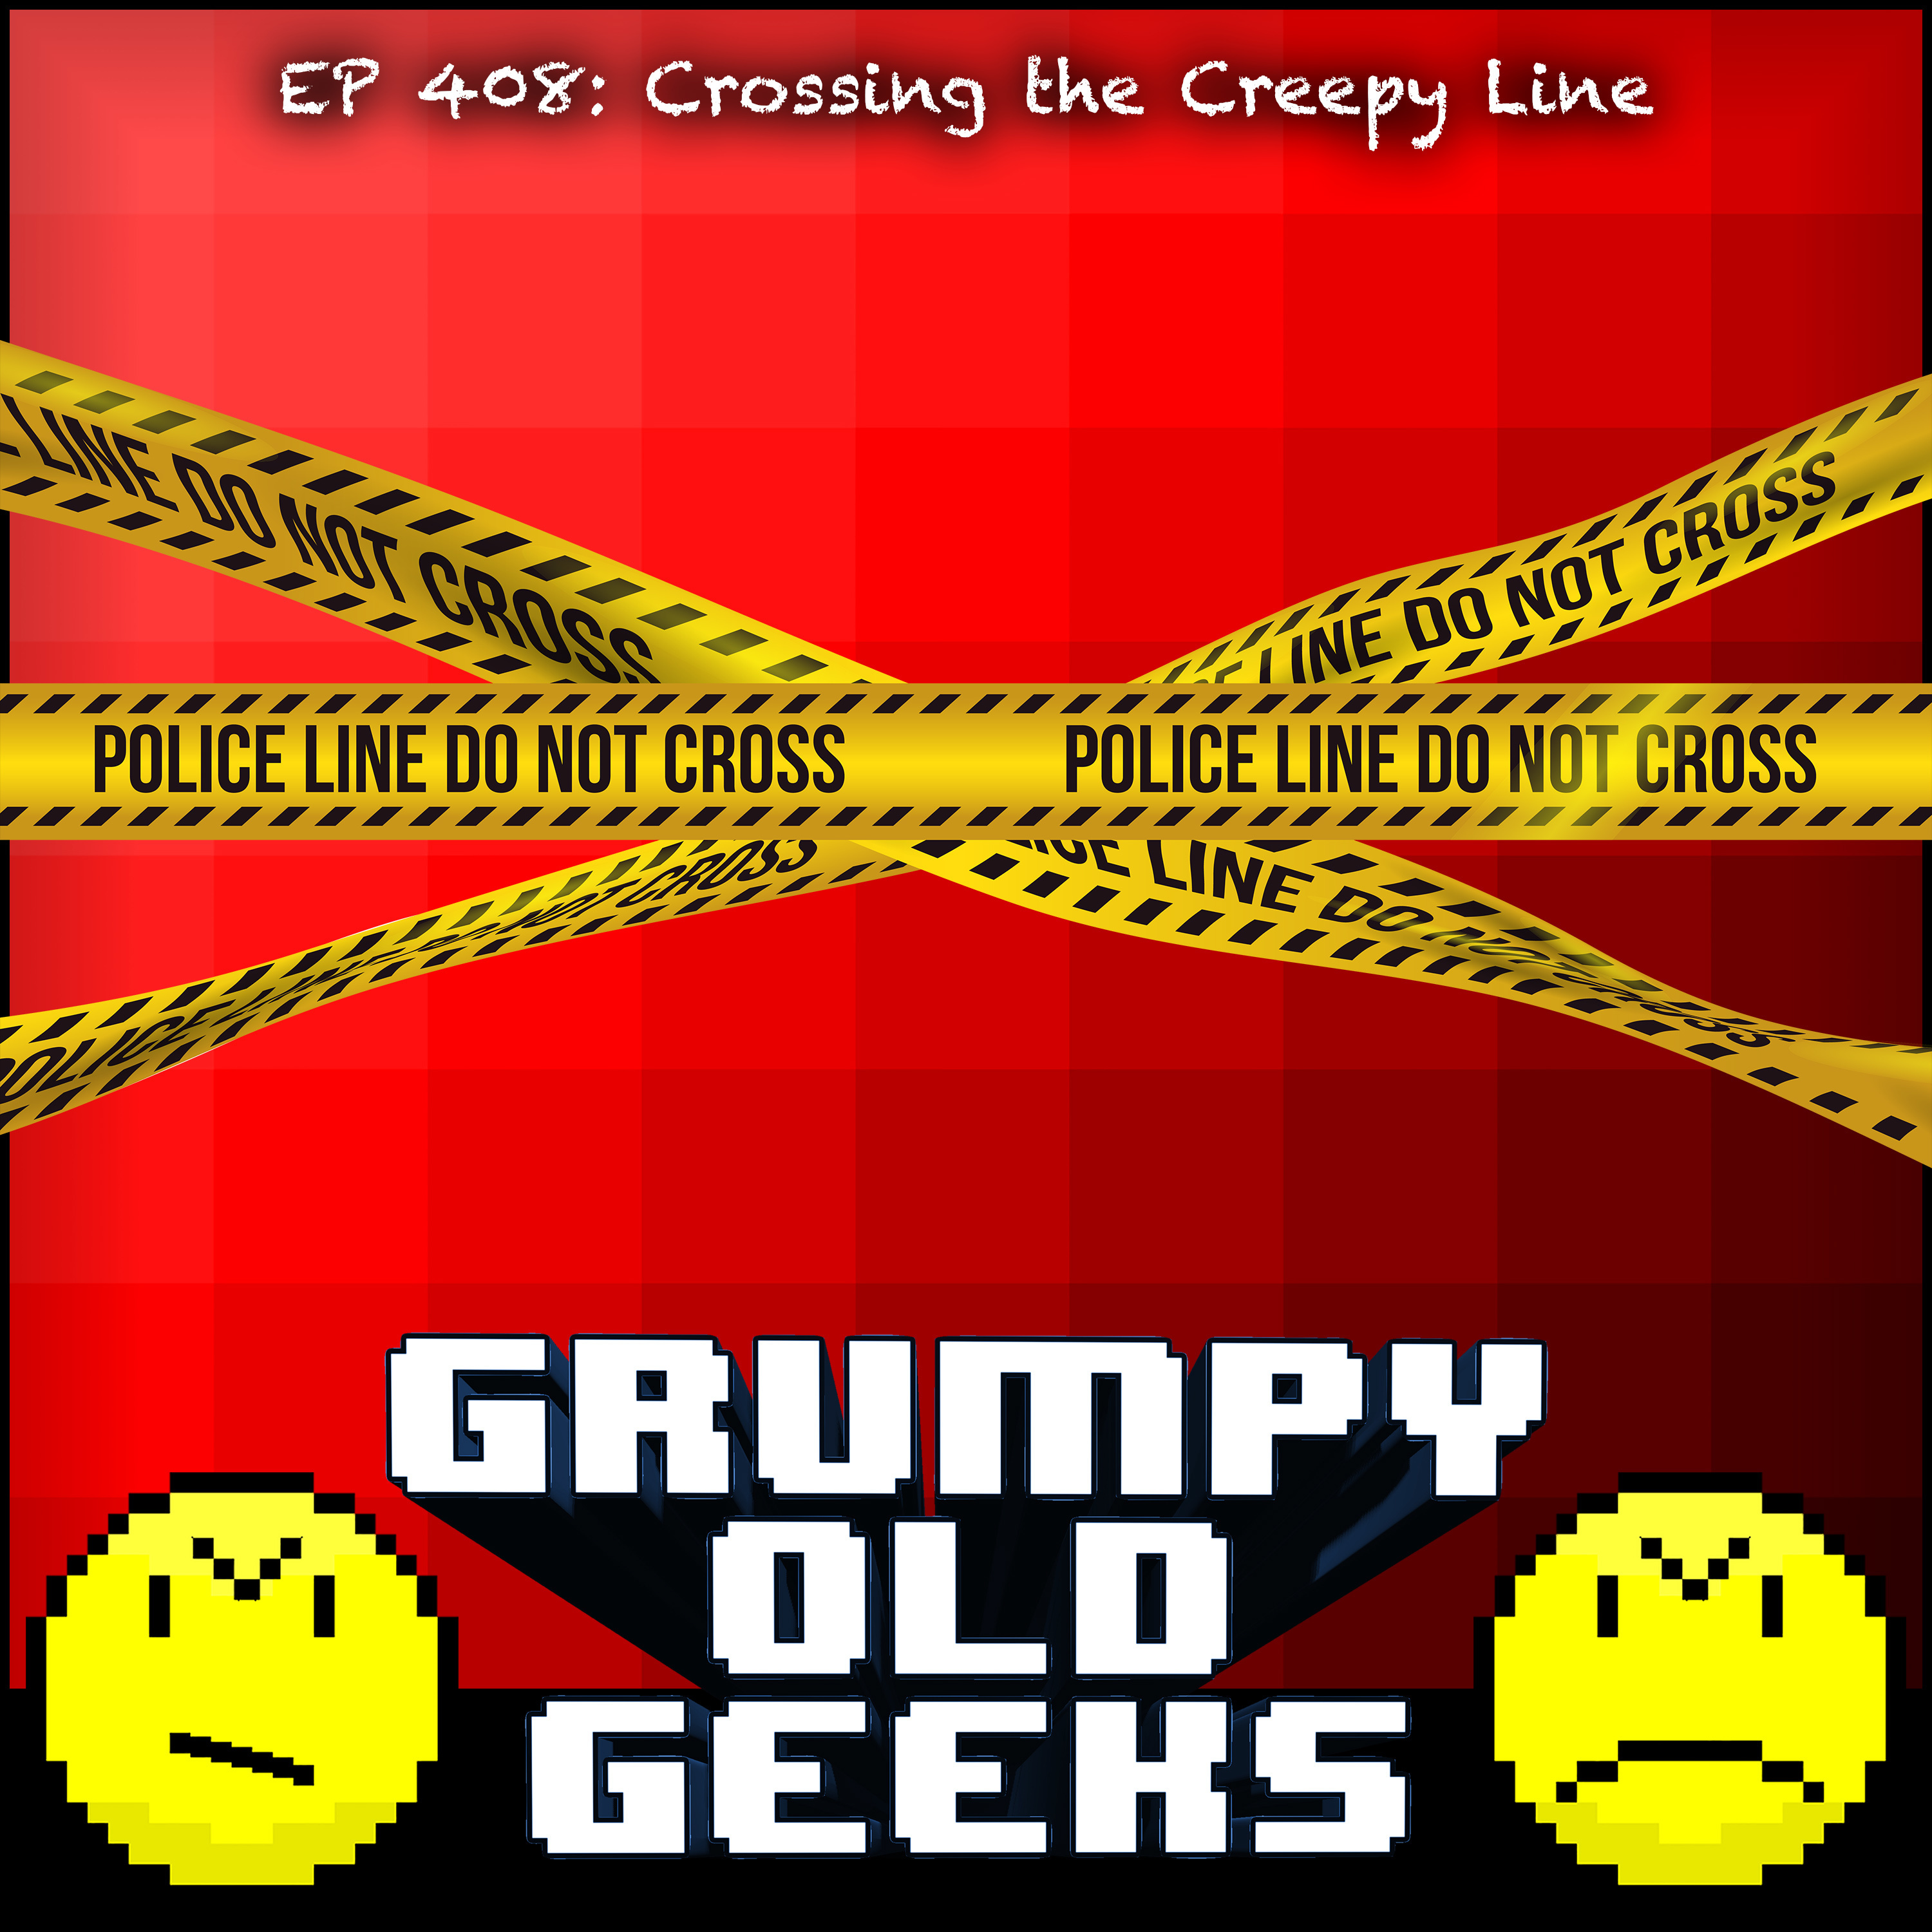 408: Crossing the Creepy Line